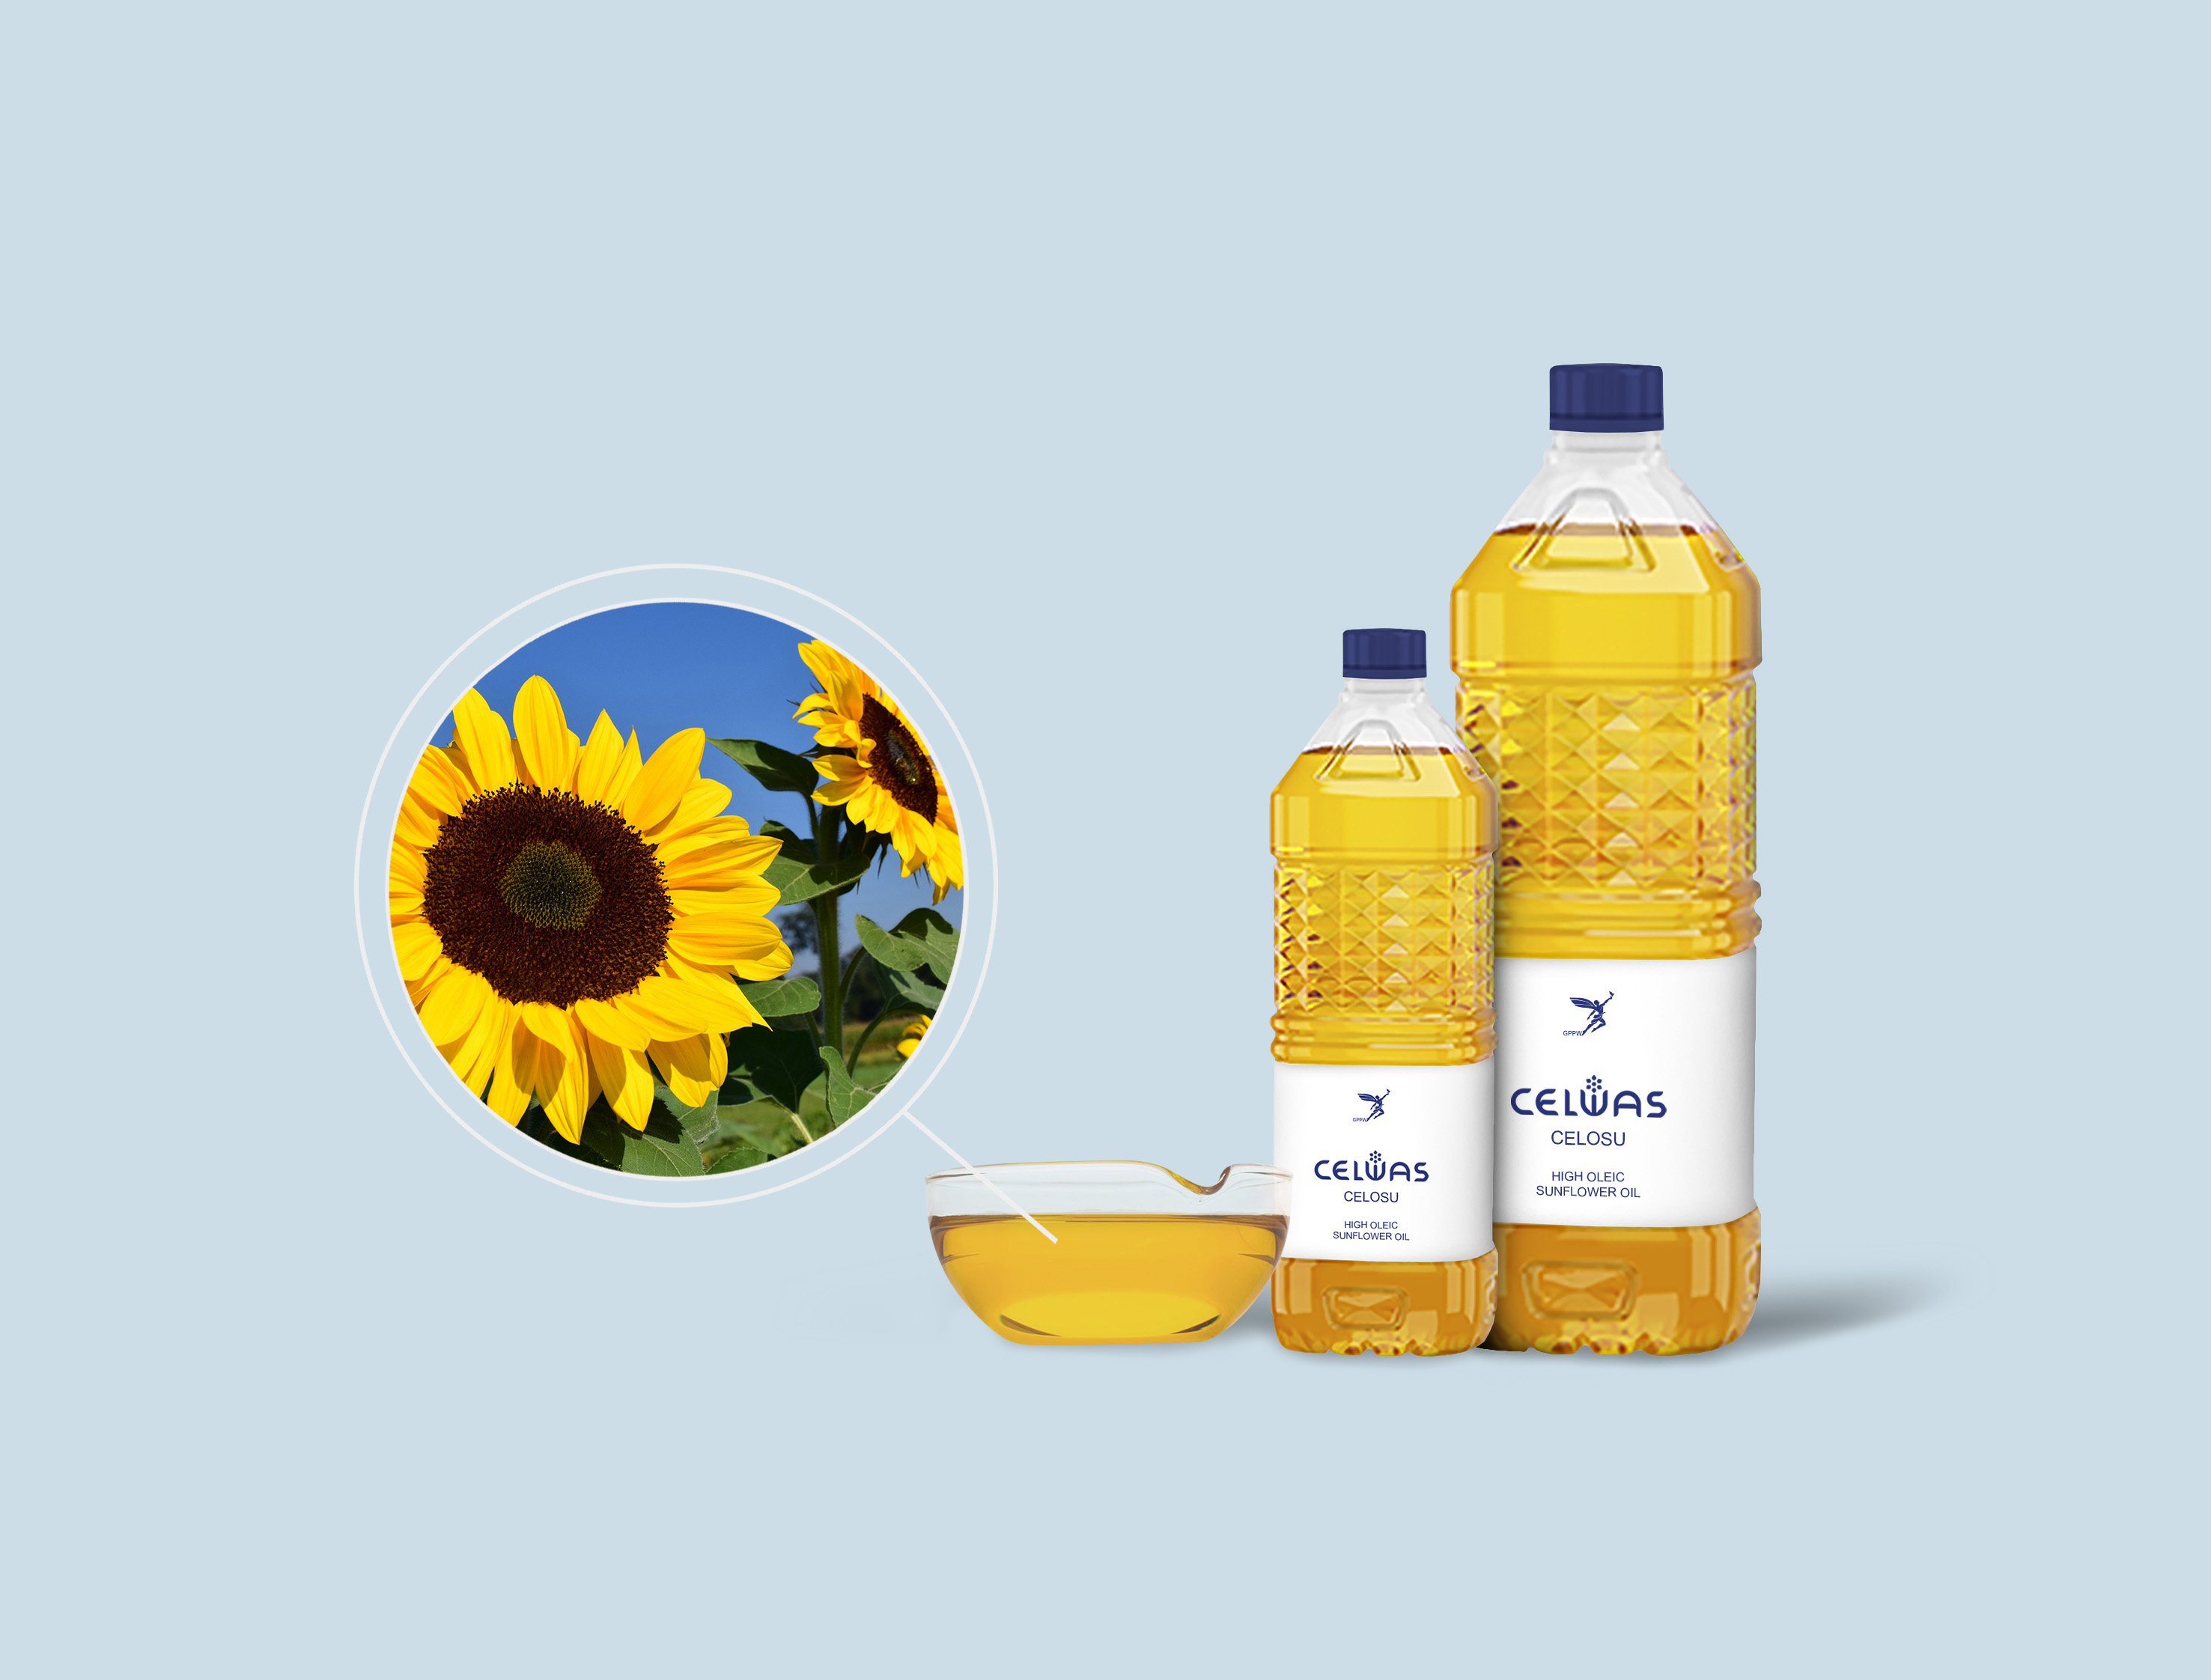 CELOSU<br />high oleic sunflower oil